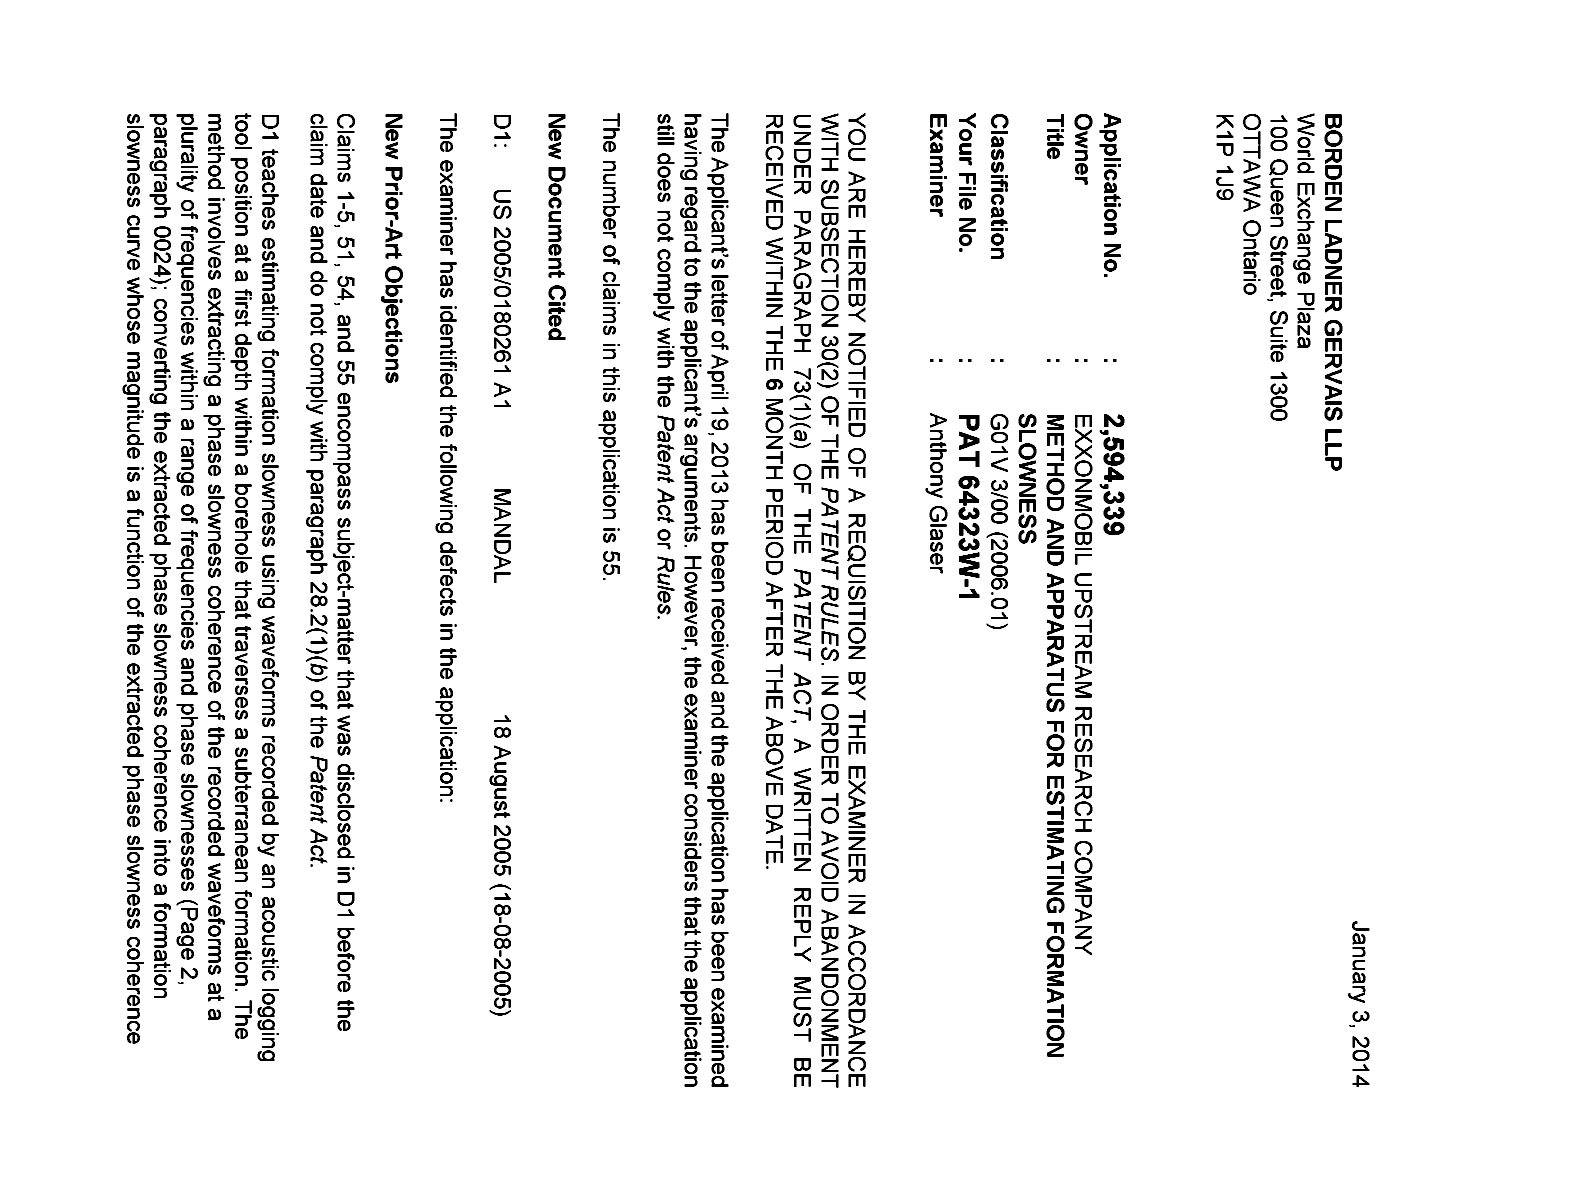 Canadian Patent Document 2594339. Prosecution-Amendment 20140103. Image 1 of 3